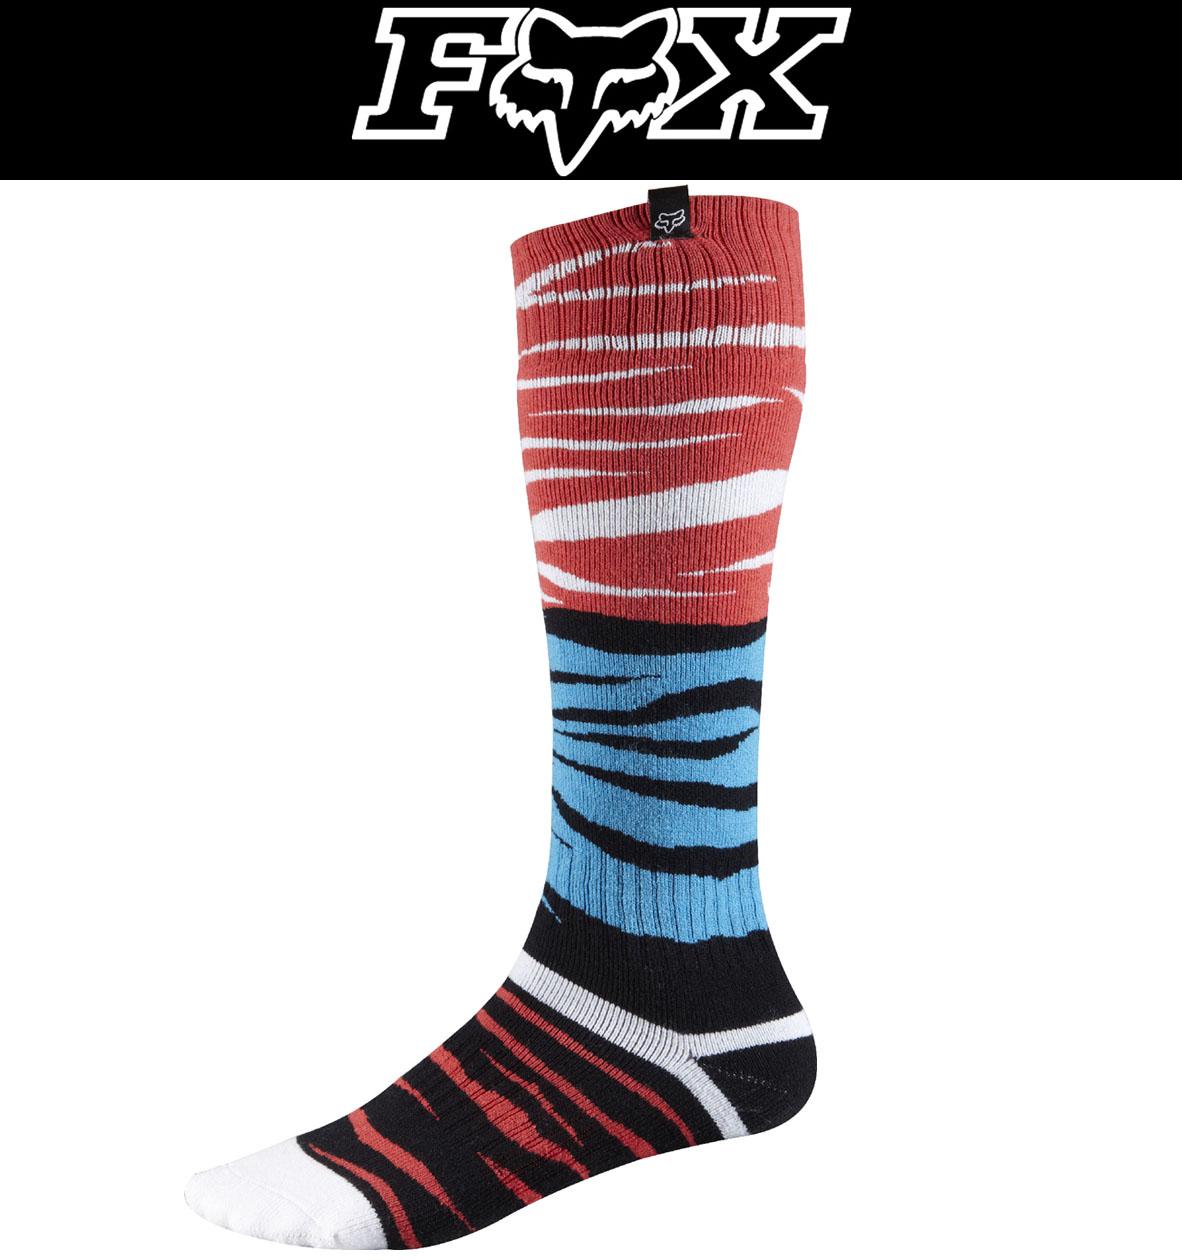 Fox racing fri forzaken youth socks black red shoe sizes 11-7 dirt atv mx 2014